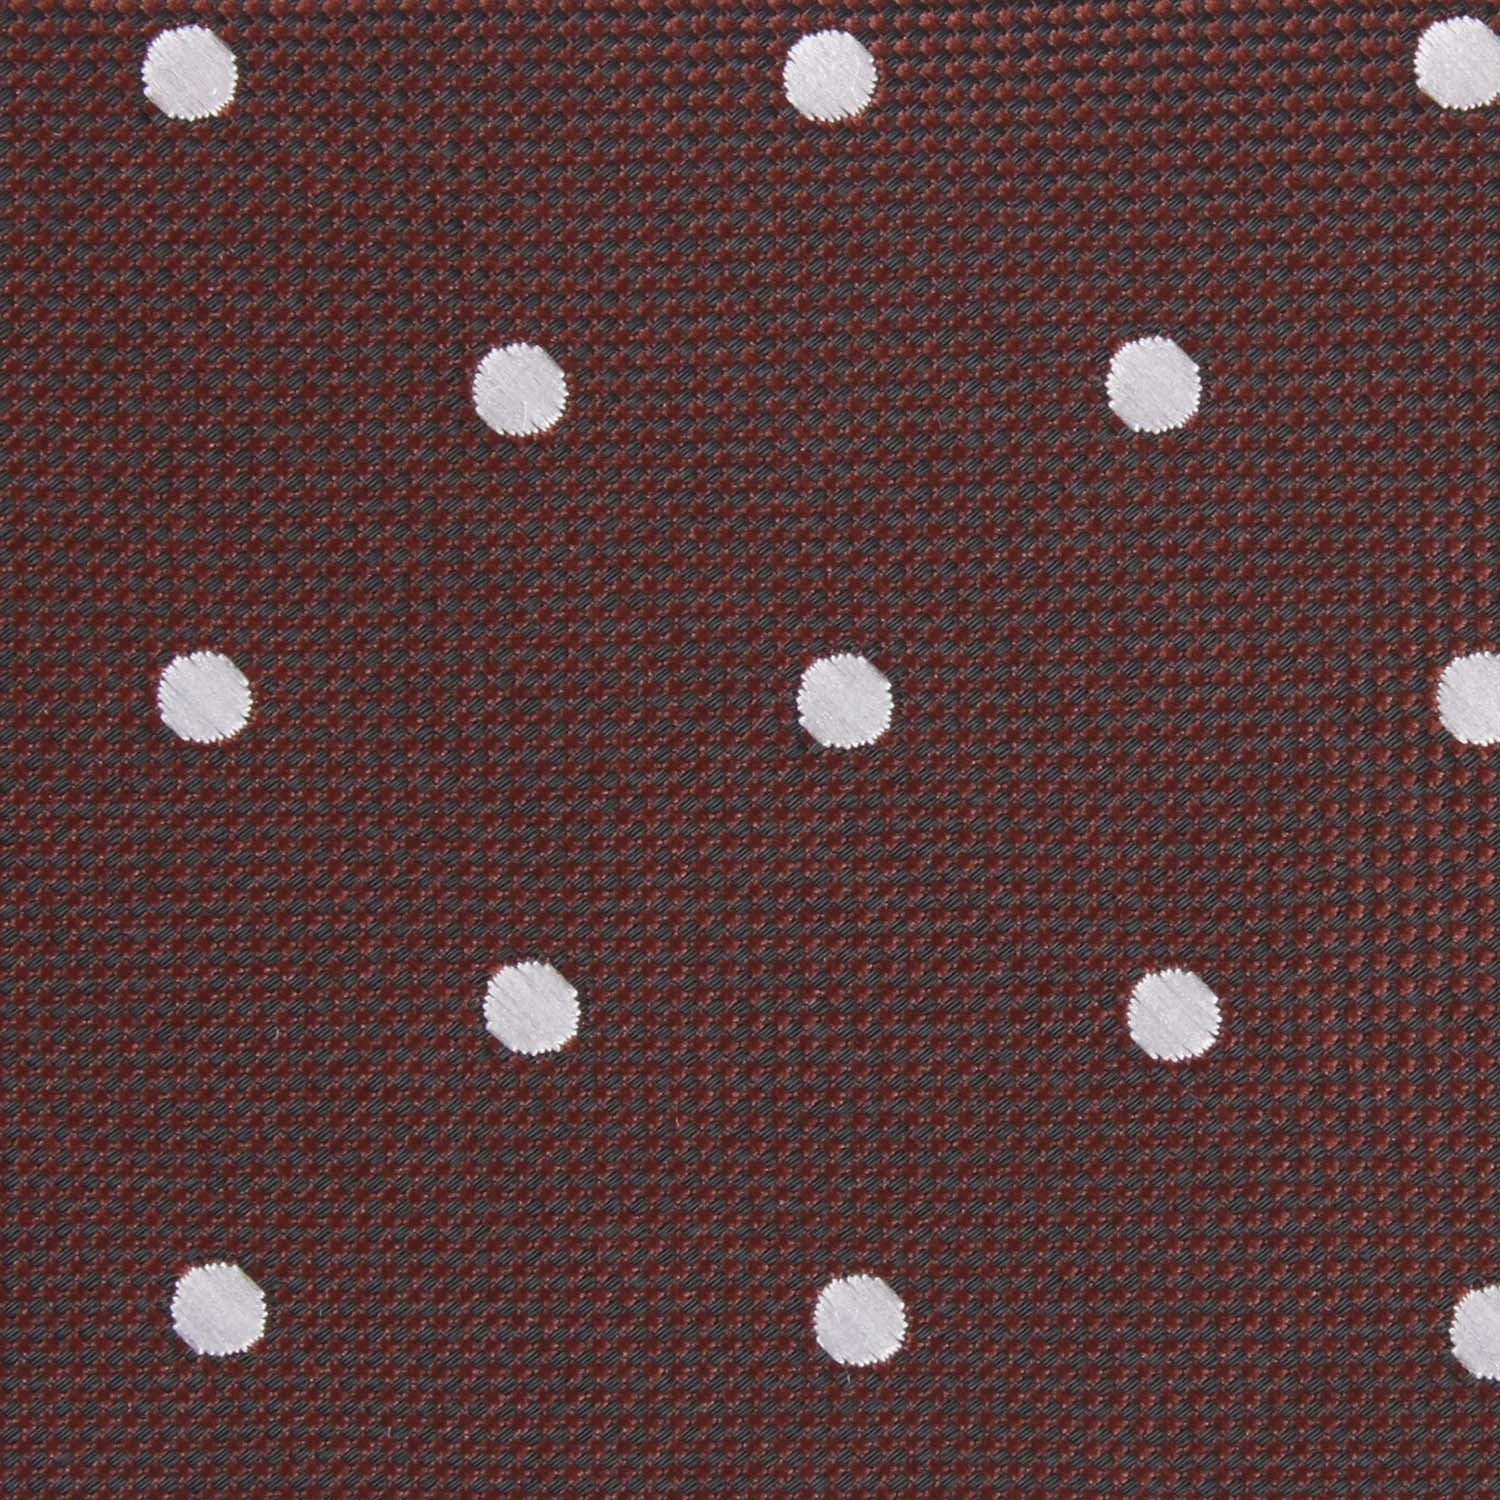 Brown with White Polka Dots Fabric Self Tie Diamond Tip Bow TieM122